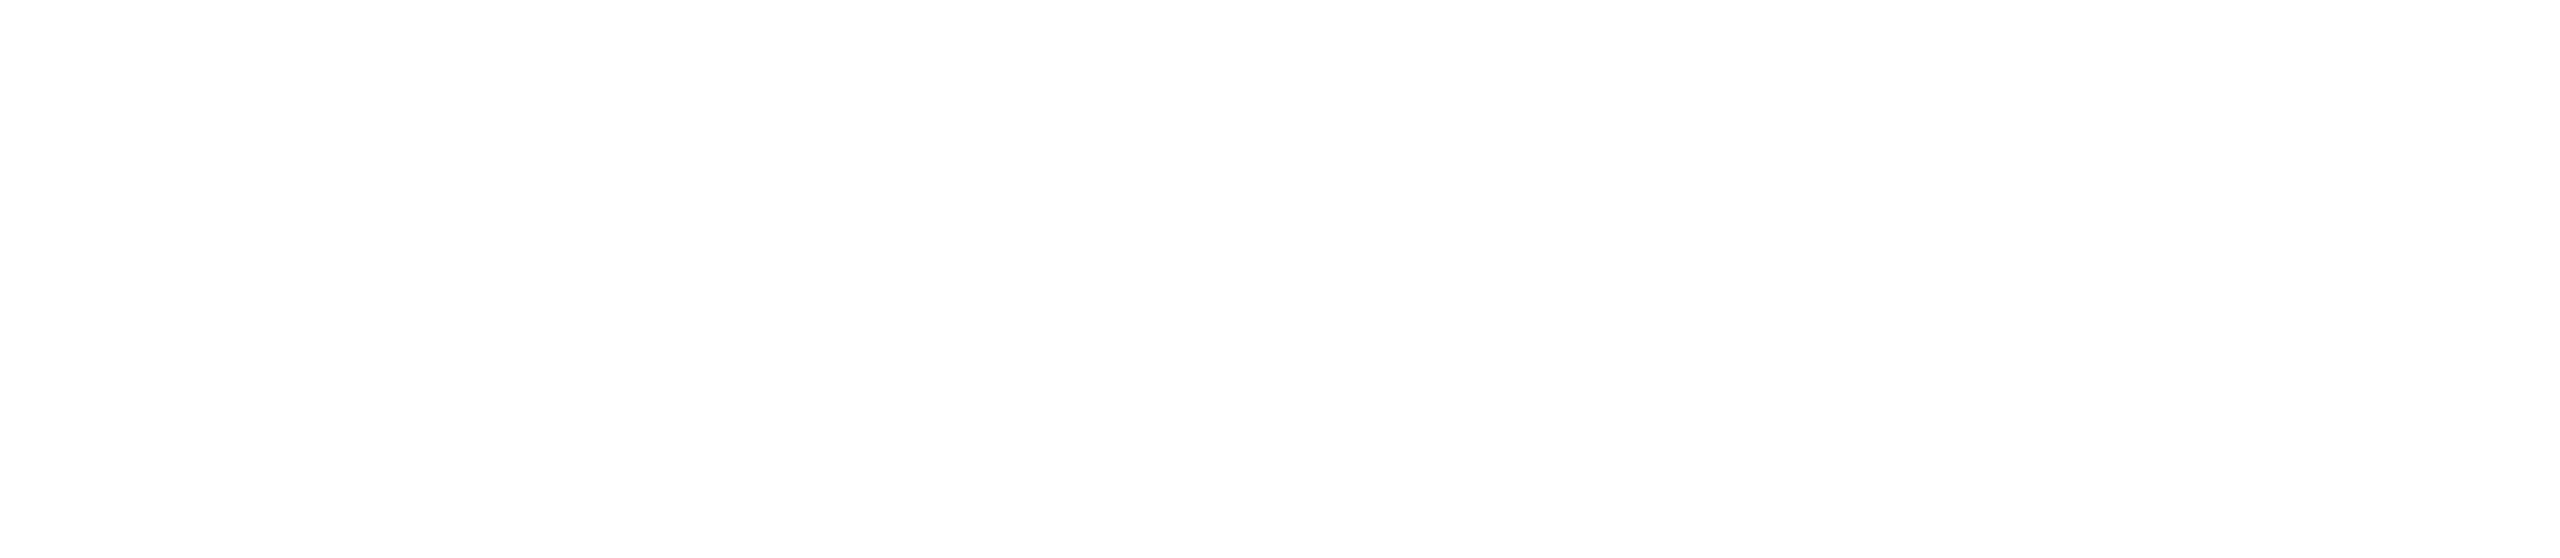 Yamaha_logo.svg